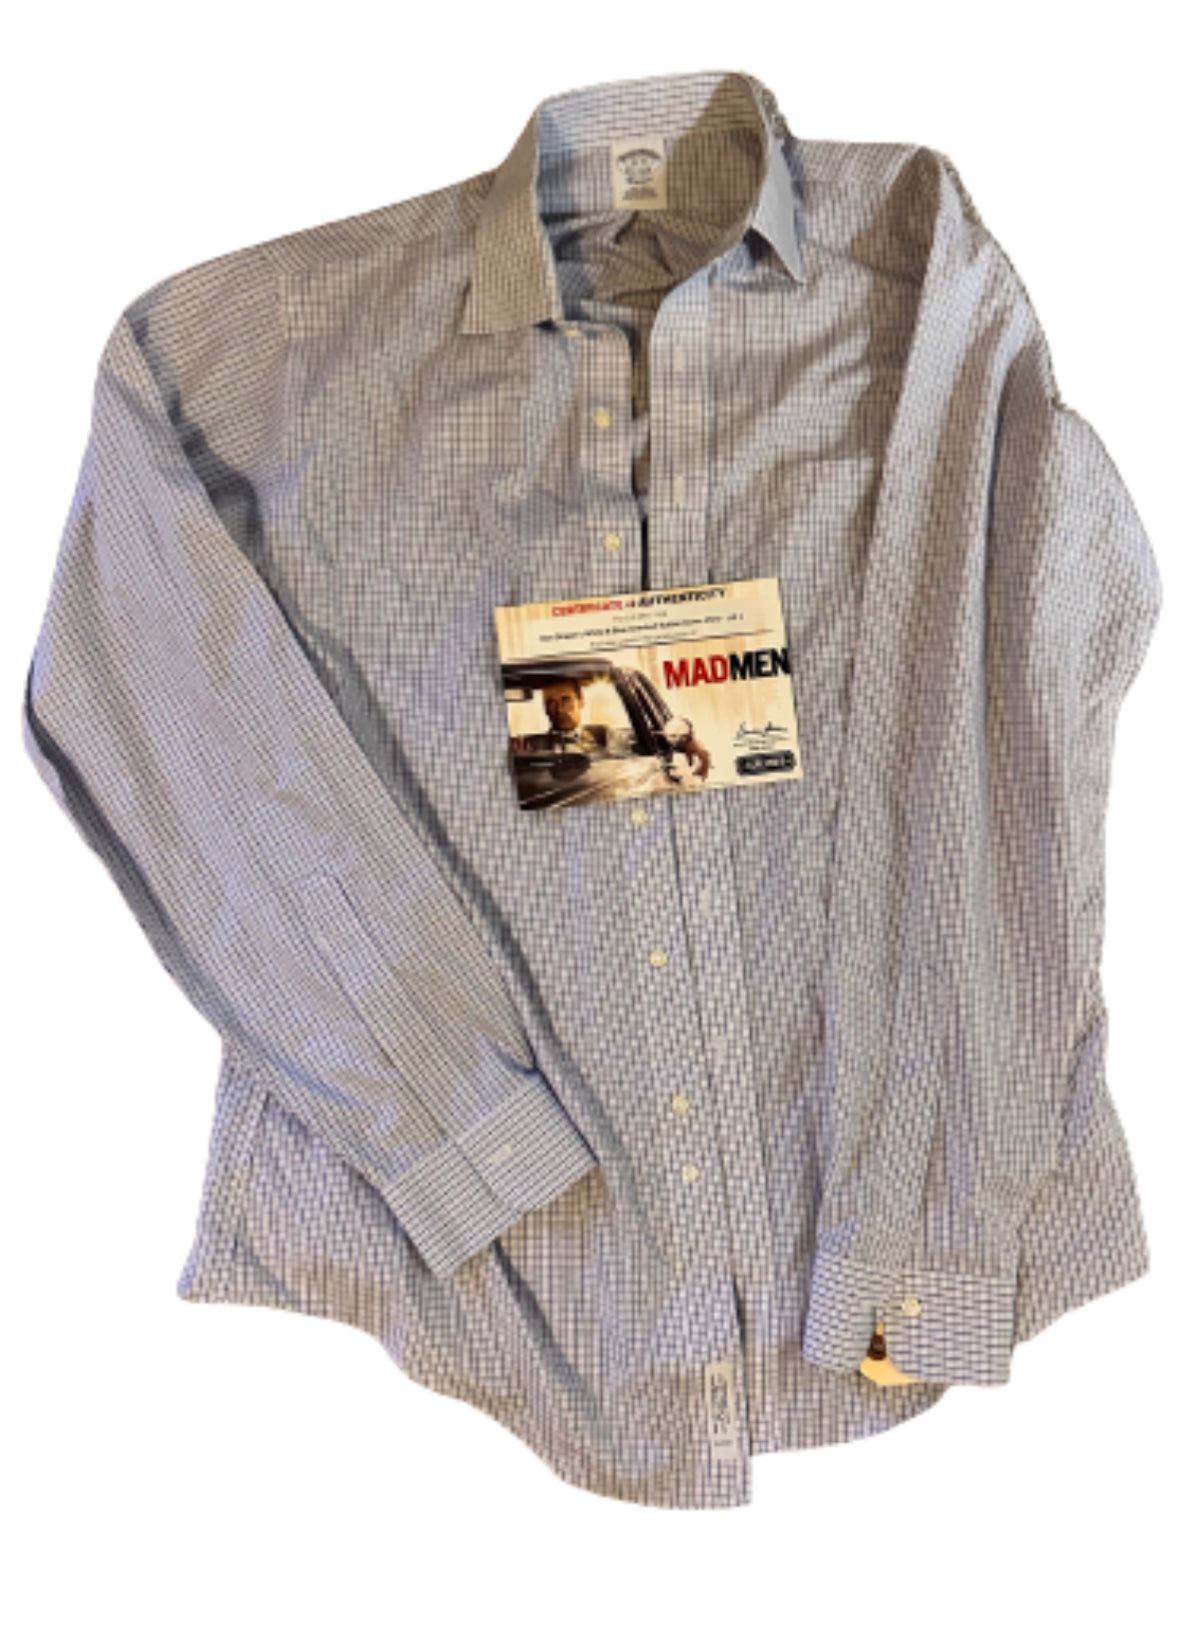 MAD MEN: Donald Draper's White and Blue Check Button Shirt (16/35/6)